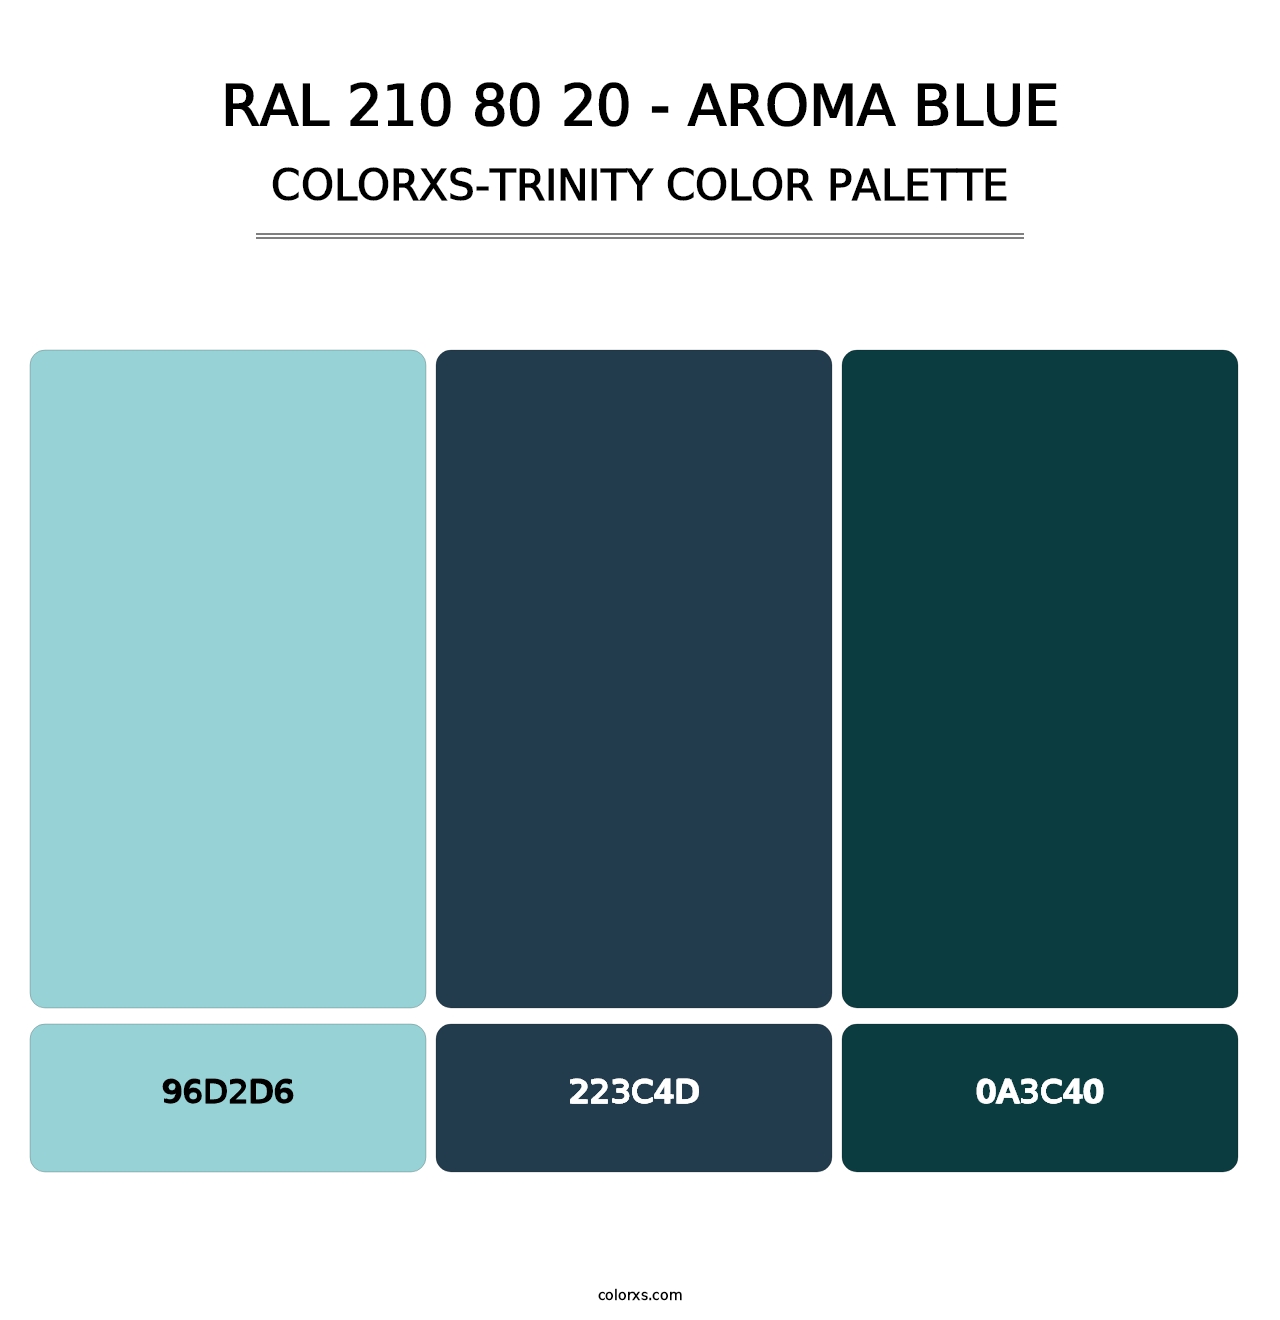 RAL 210 80 20 - Aroma Blue - Colorxs Trinity Palette